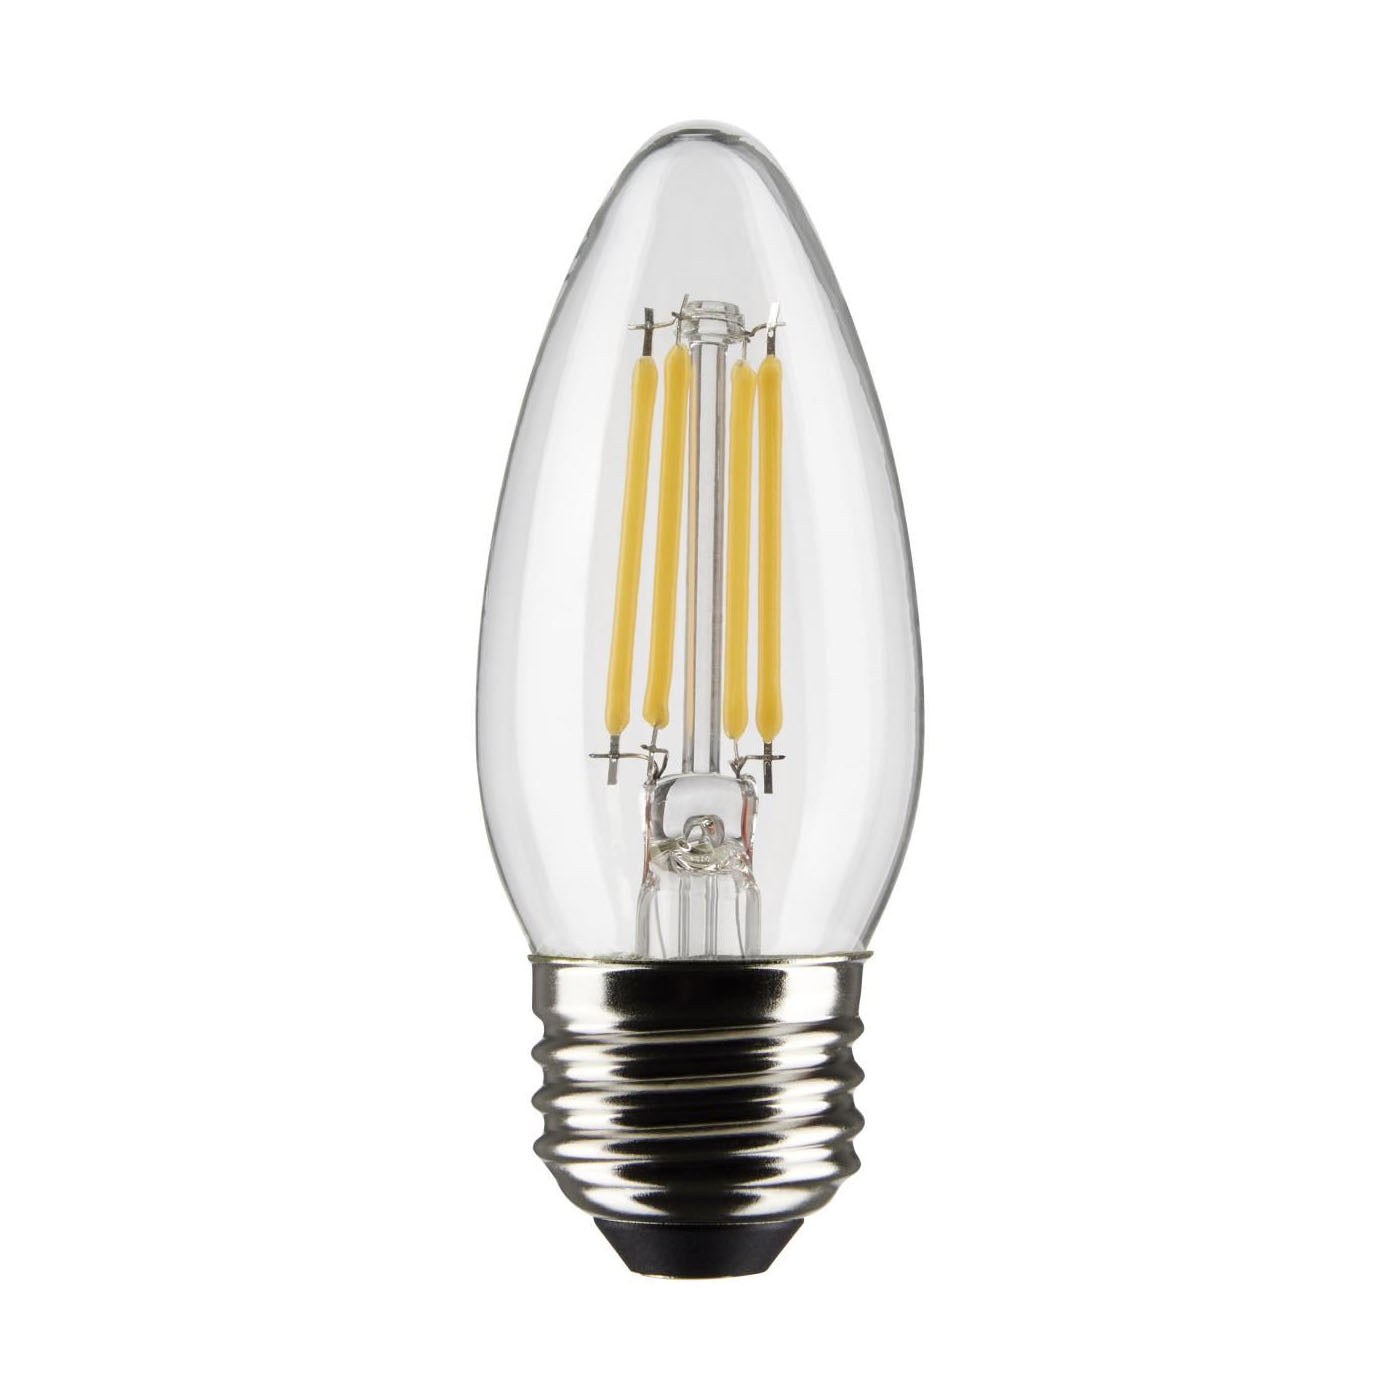 LED Torpedo Shape Light Bulb, 60 watt